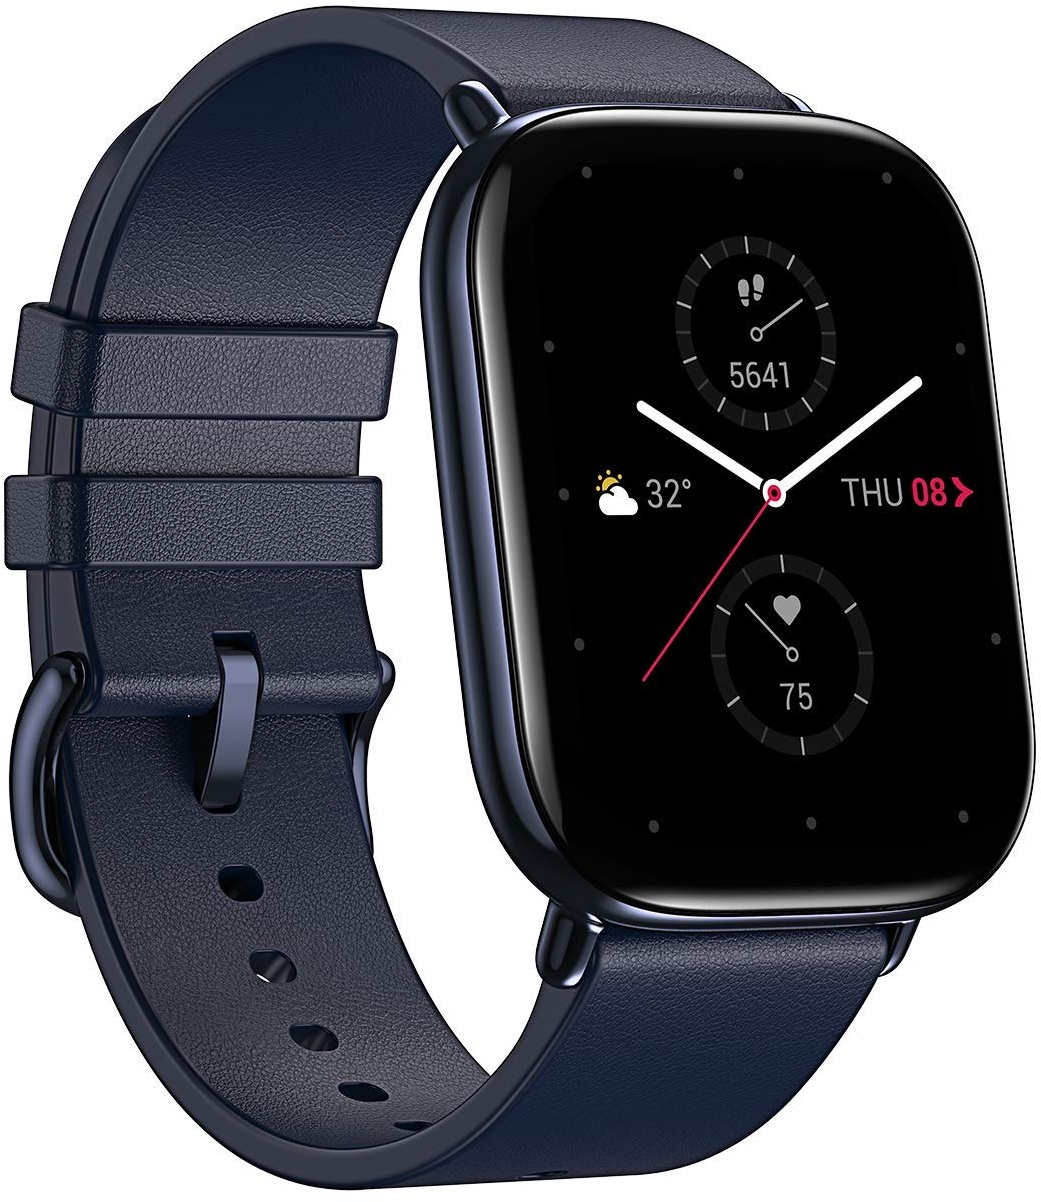 Zepp Smartwatch E 1,65 Zoll Touch-Farbdisplay Fitness Armbanduhr 5 ATM wasserdicht Sportuhr mit SpO2 Blutsauerstoffsättigung Messung, 11 Sportmodi (Blue)